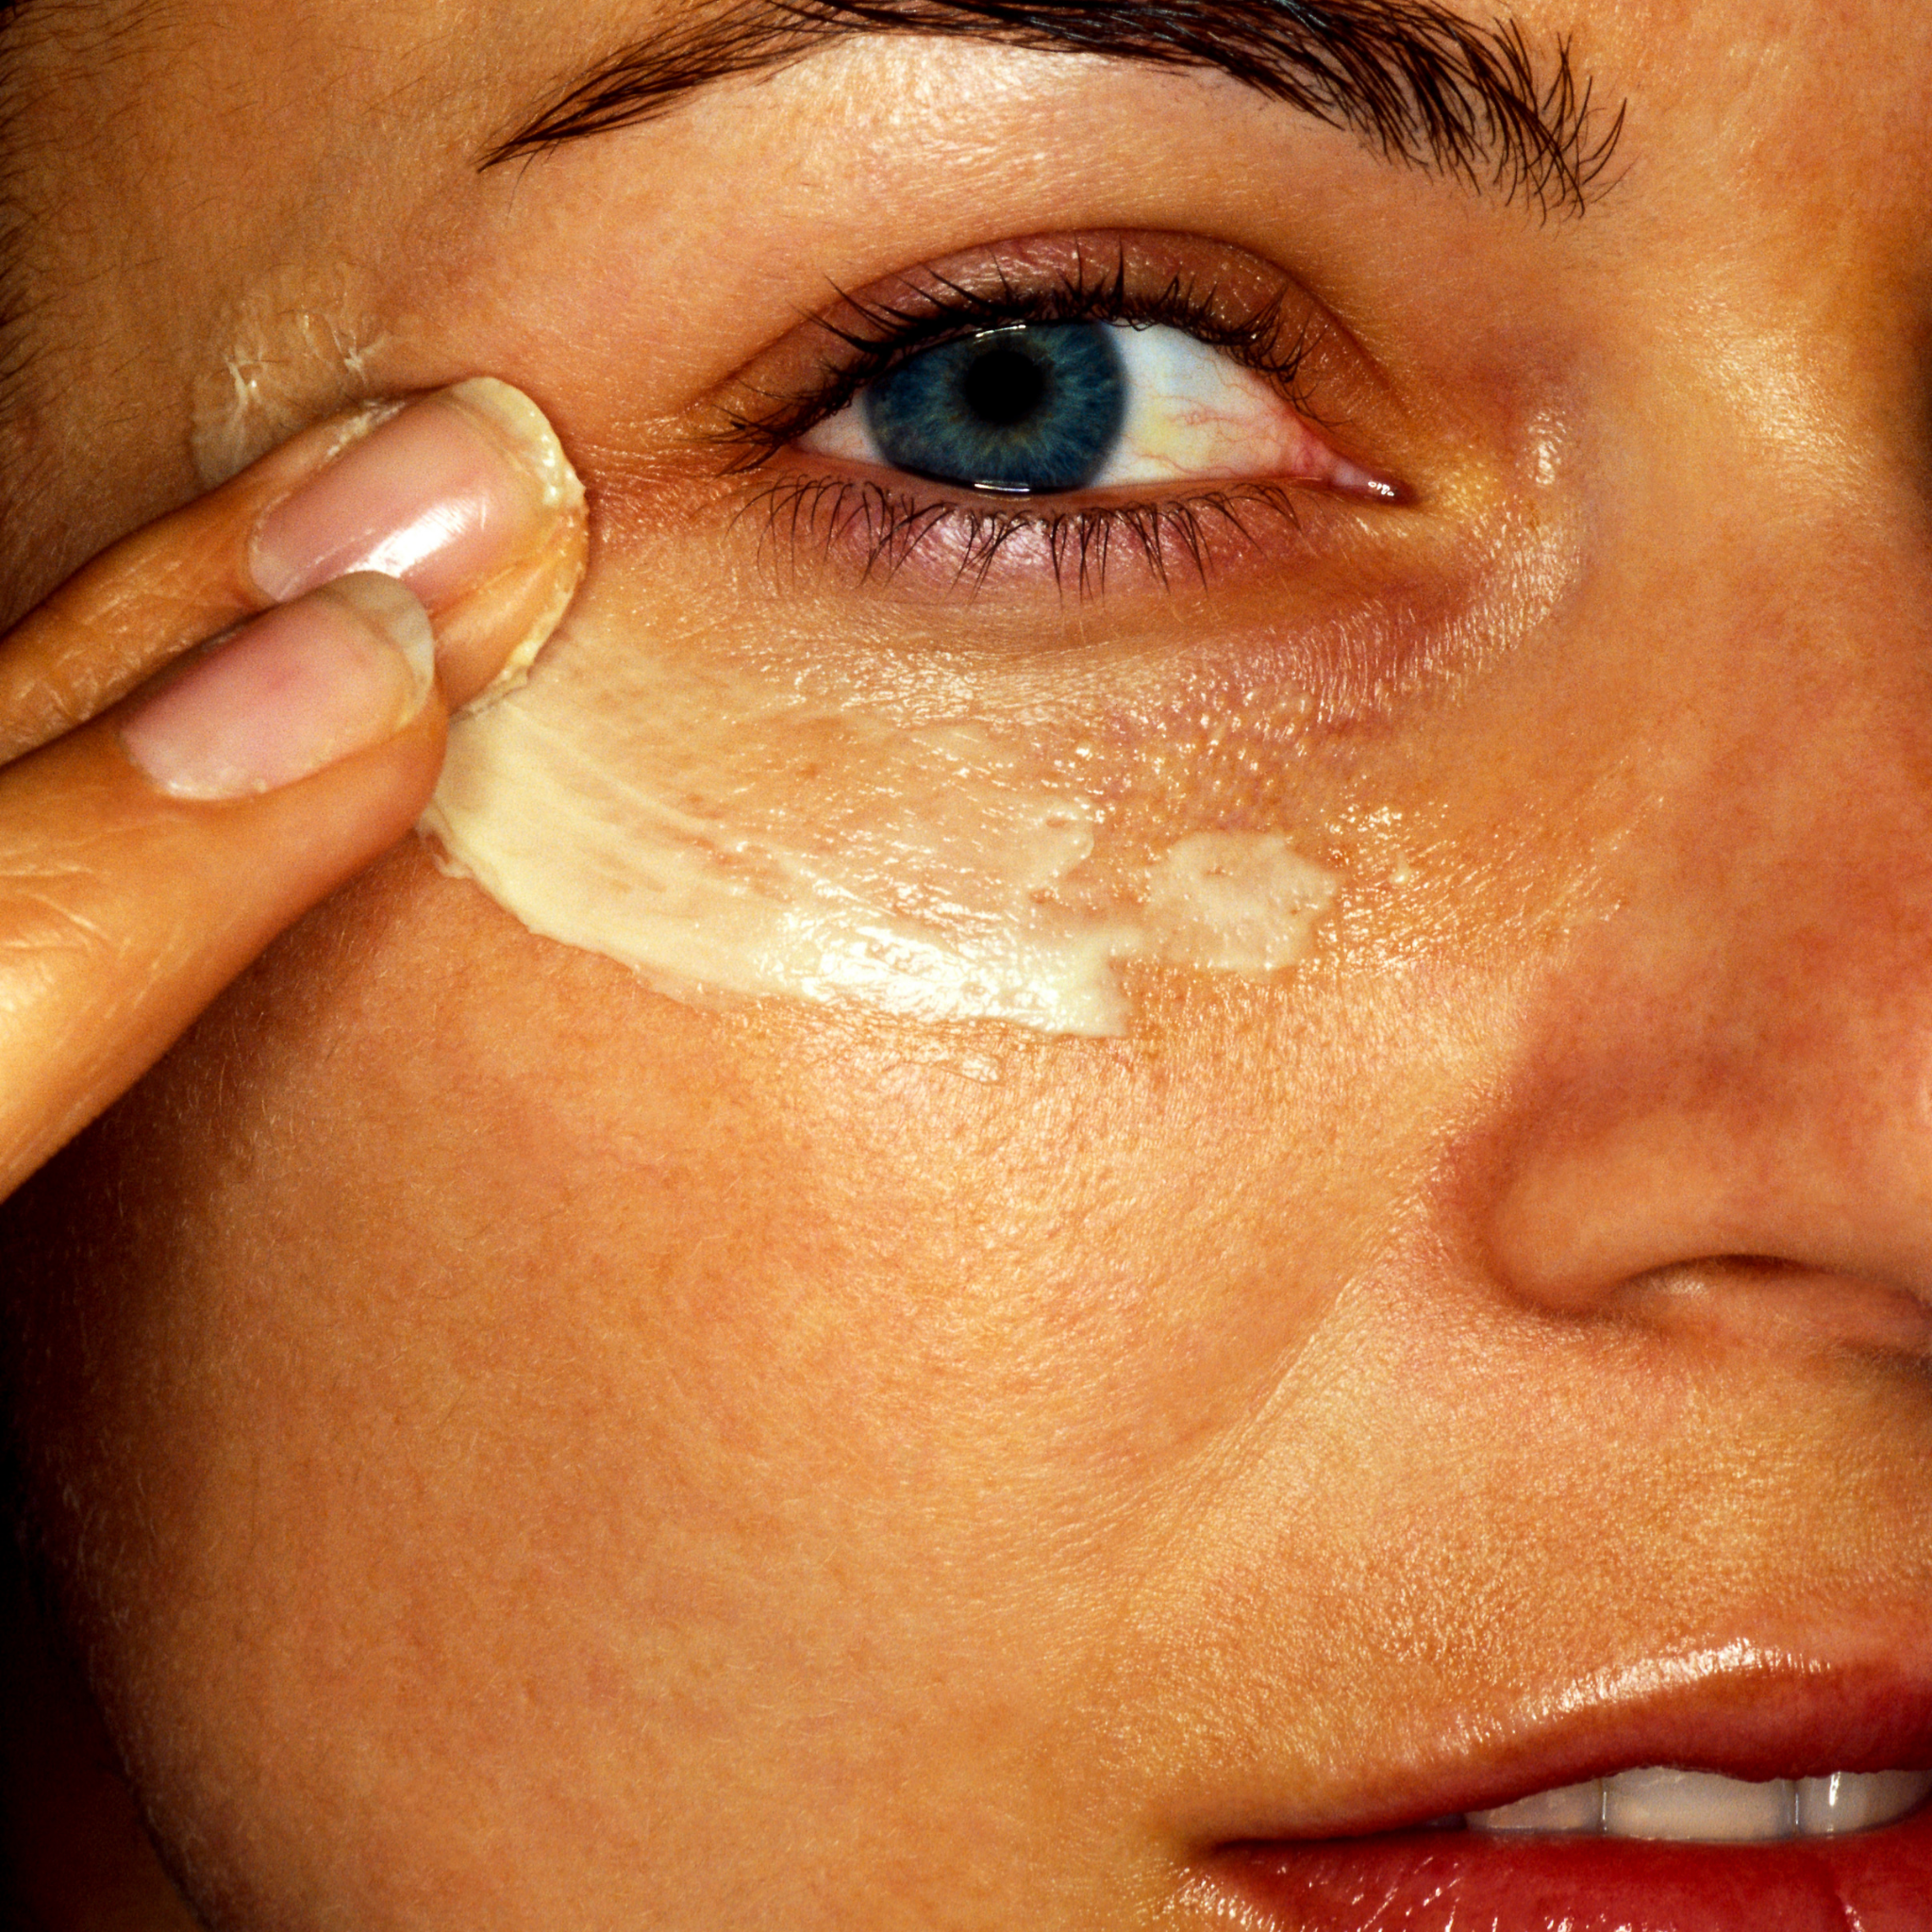 NeutralEyes Eye Complex RAOOF MD Dermatology White Cream under woman eye